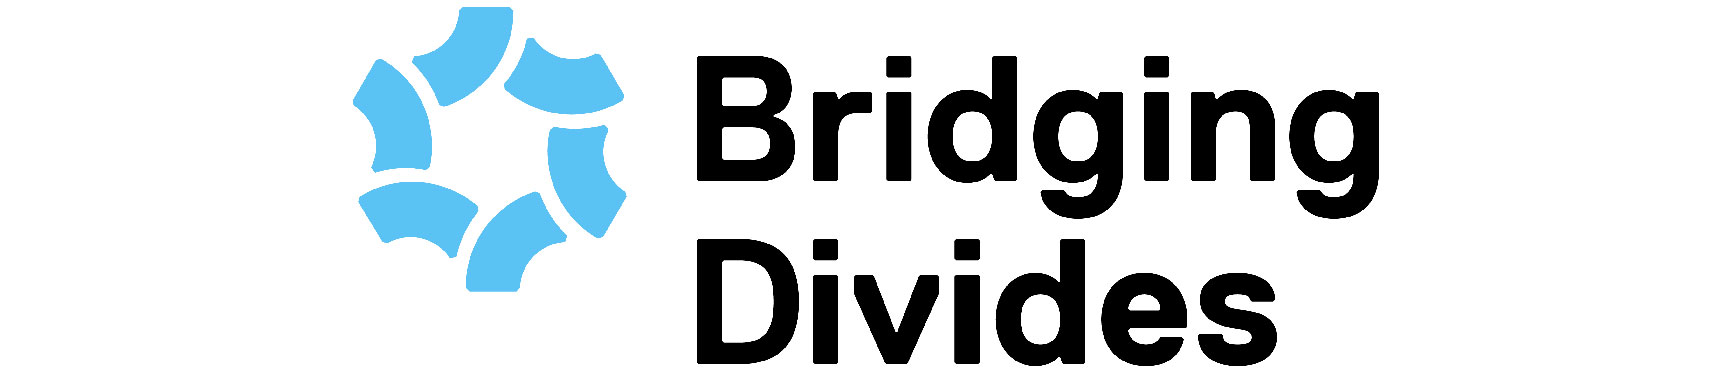 Bridging Divides logo